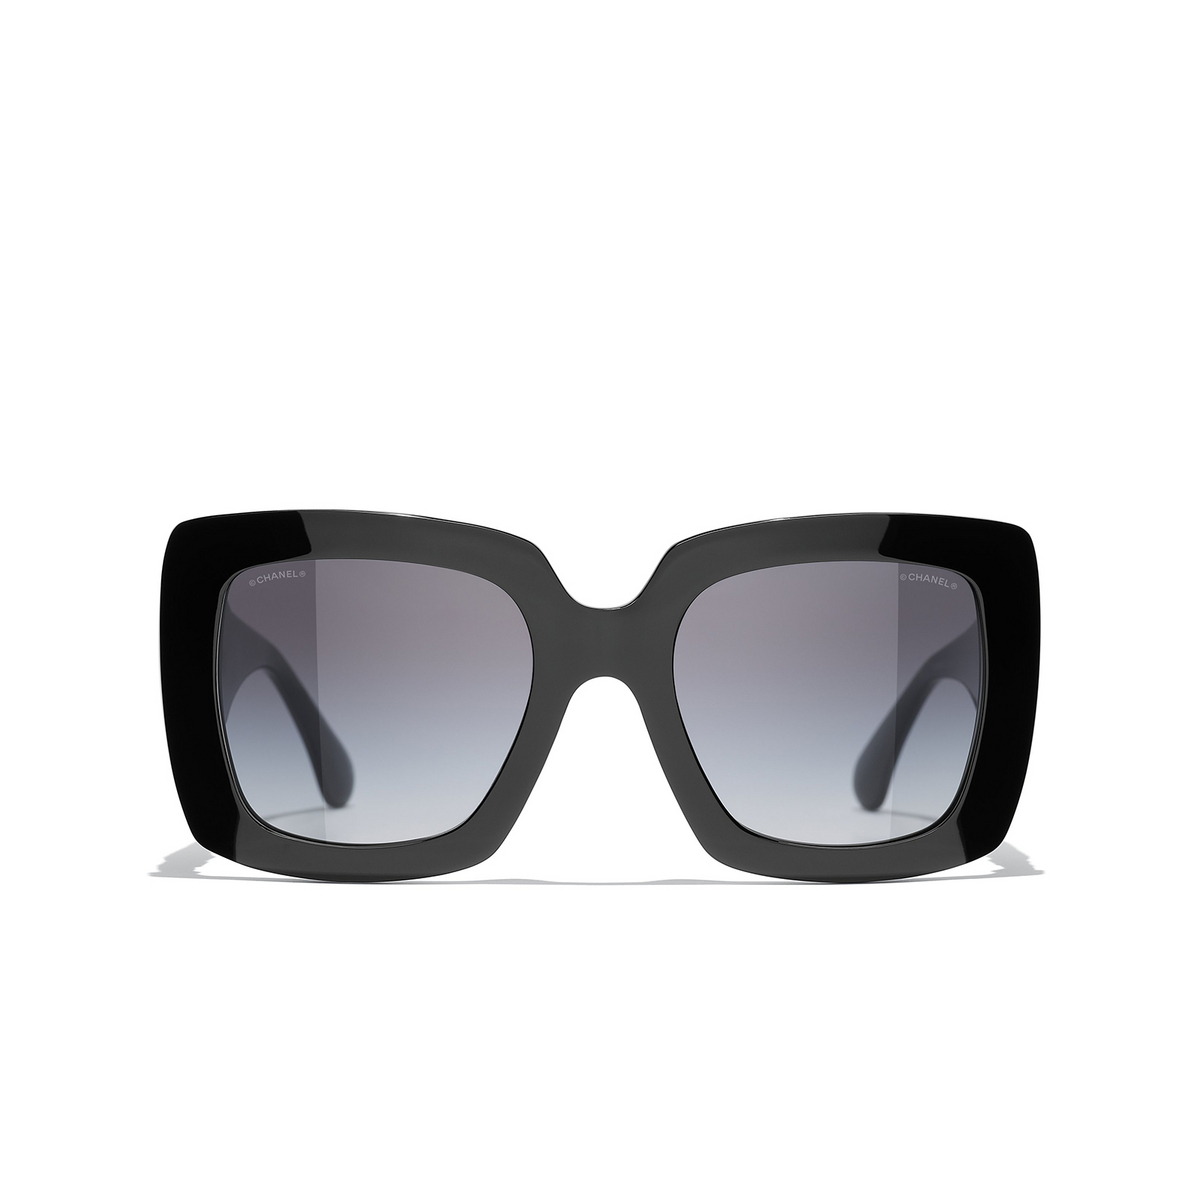 CHANEL square Sunglasses C622S6 Black - front view